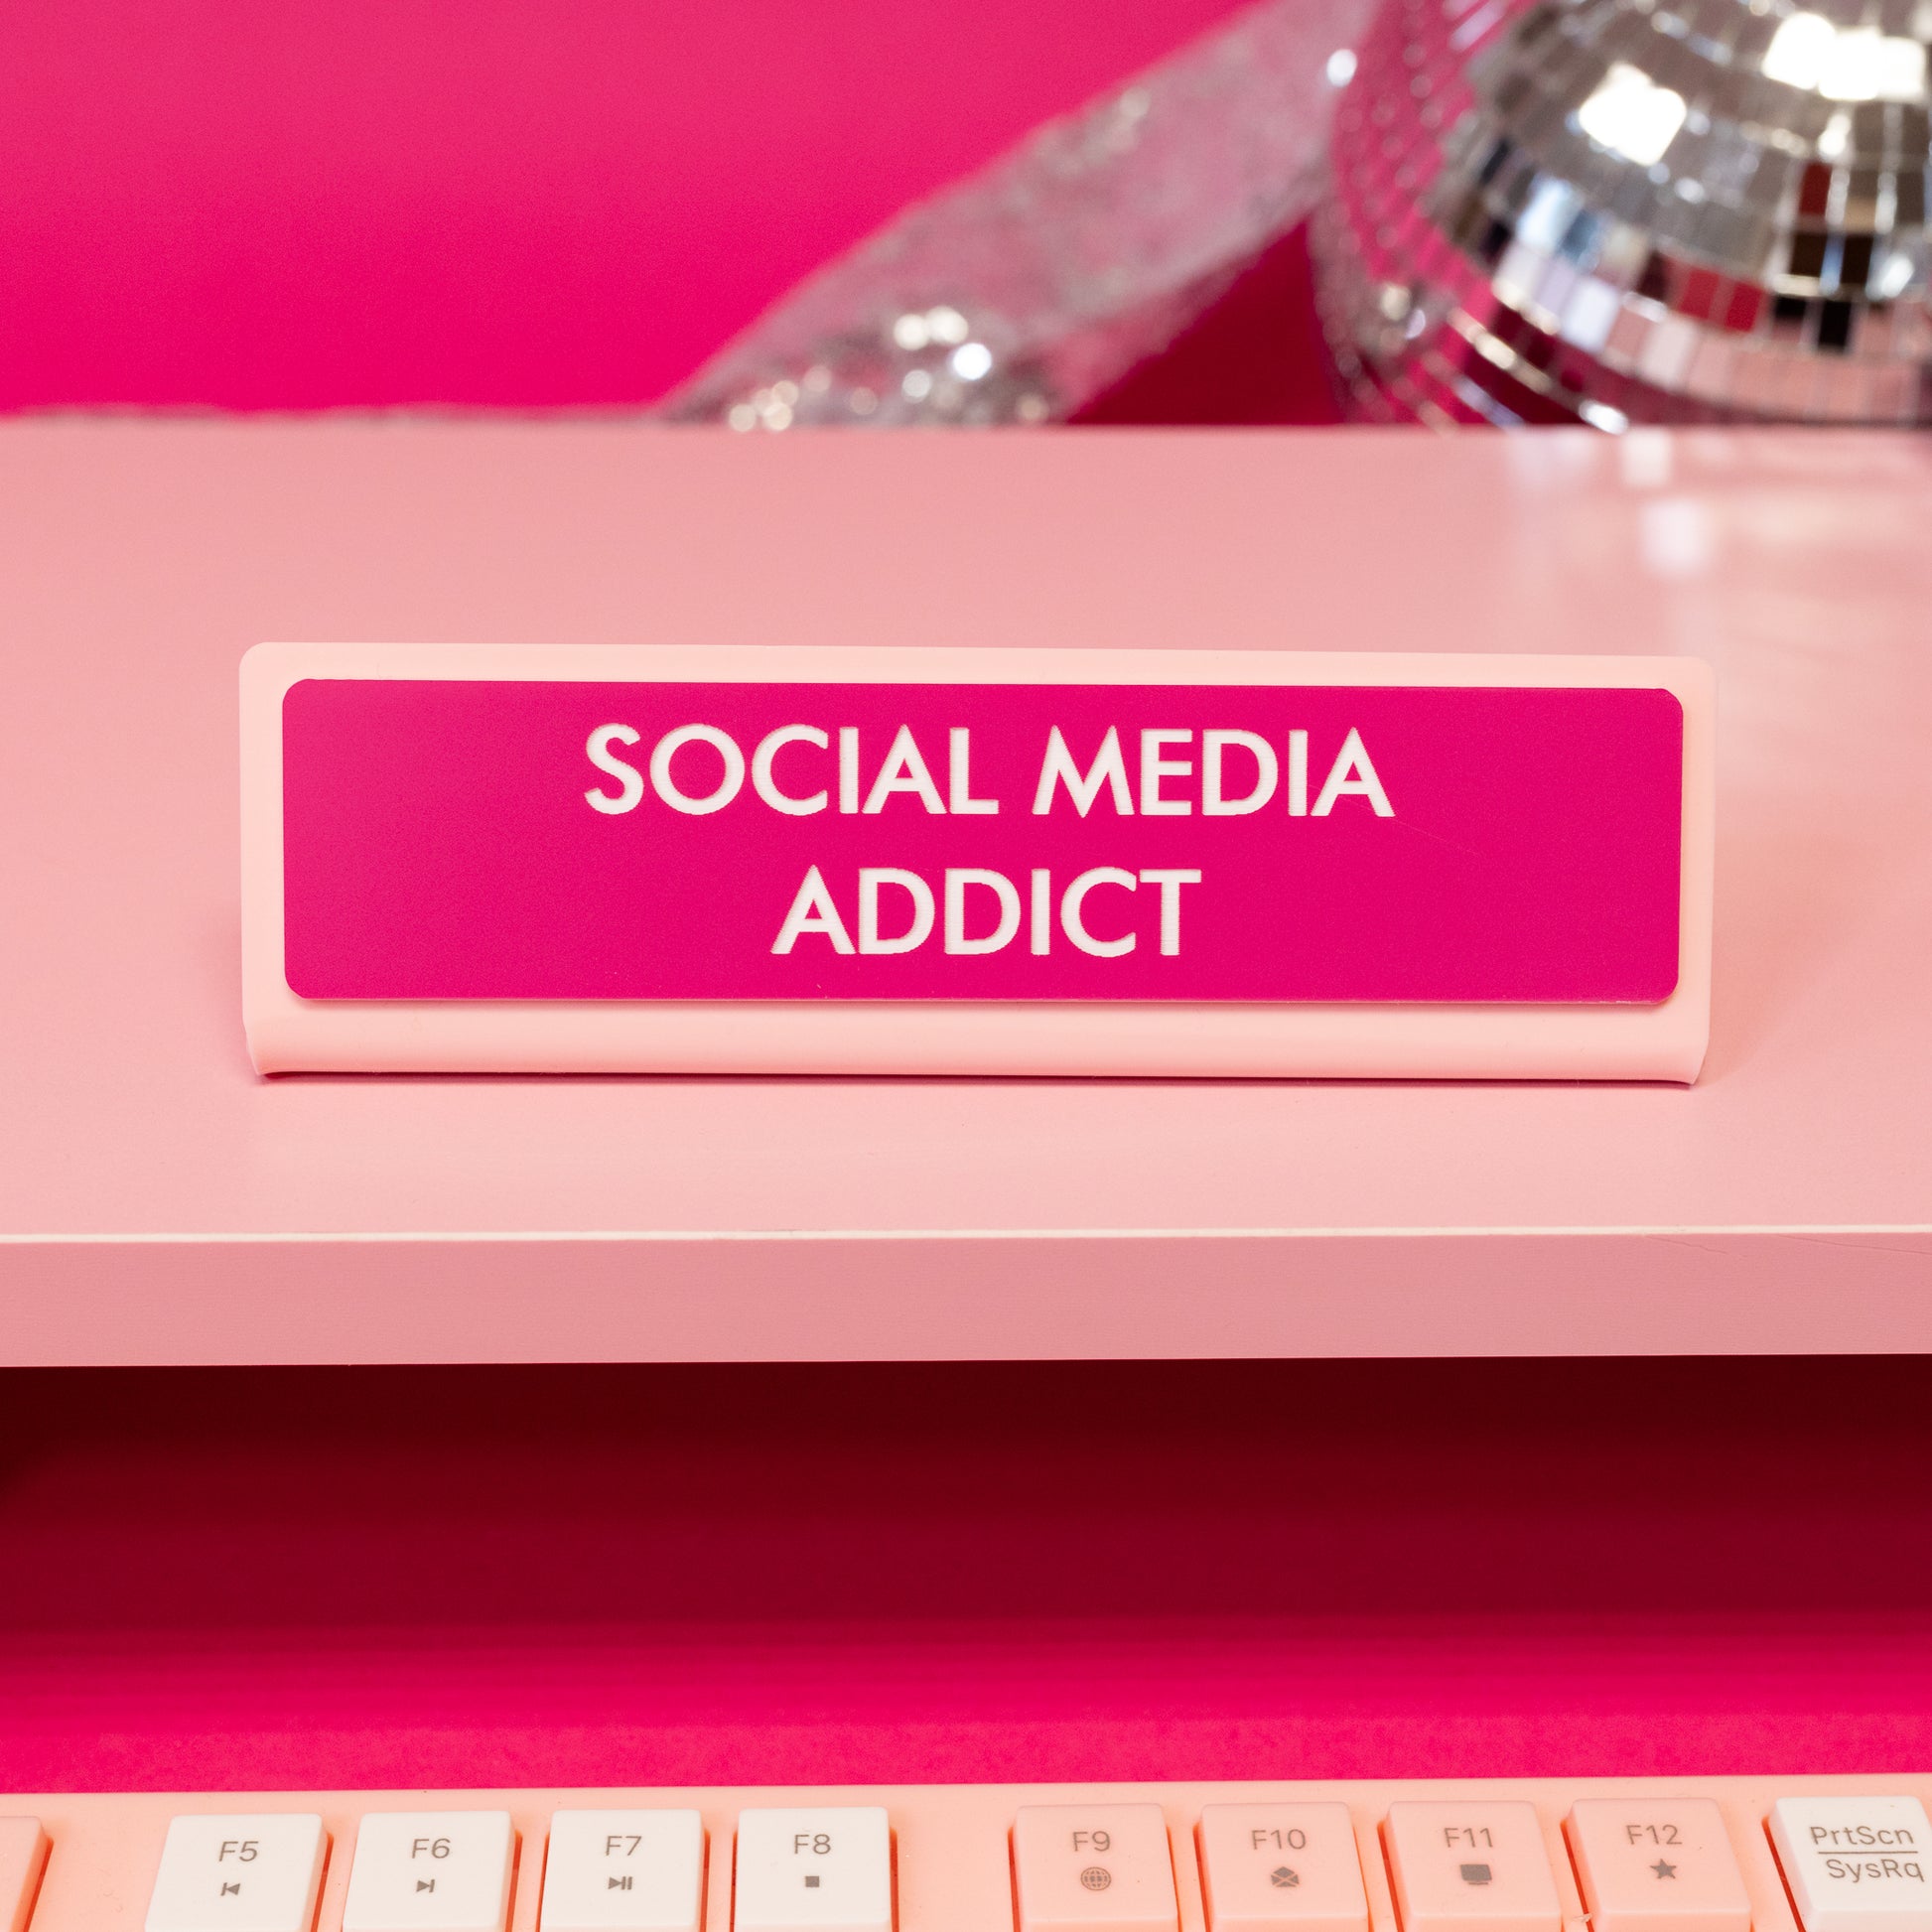 social media addict pink and white desk sign